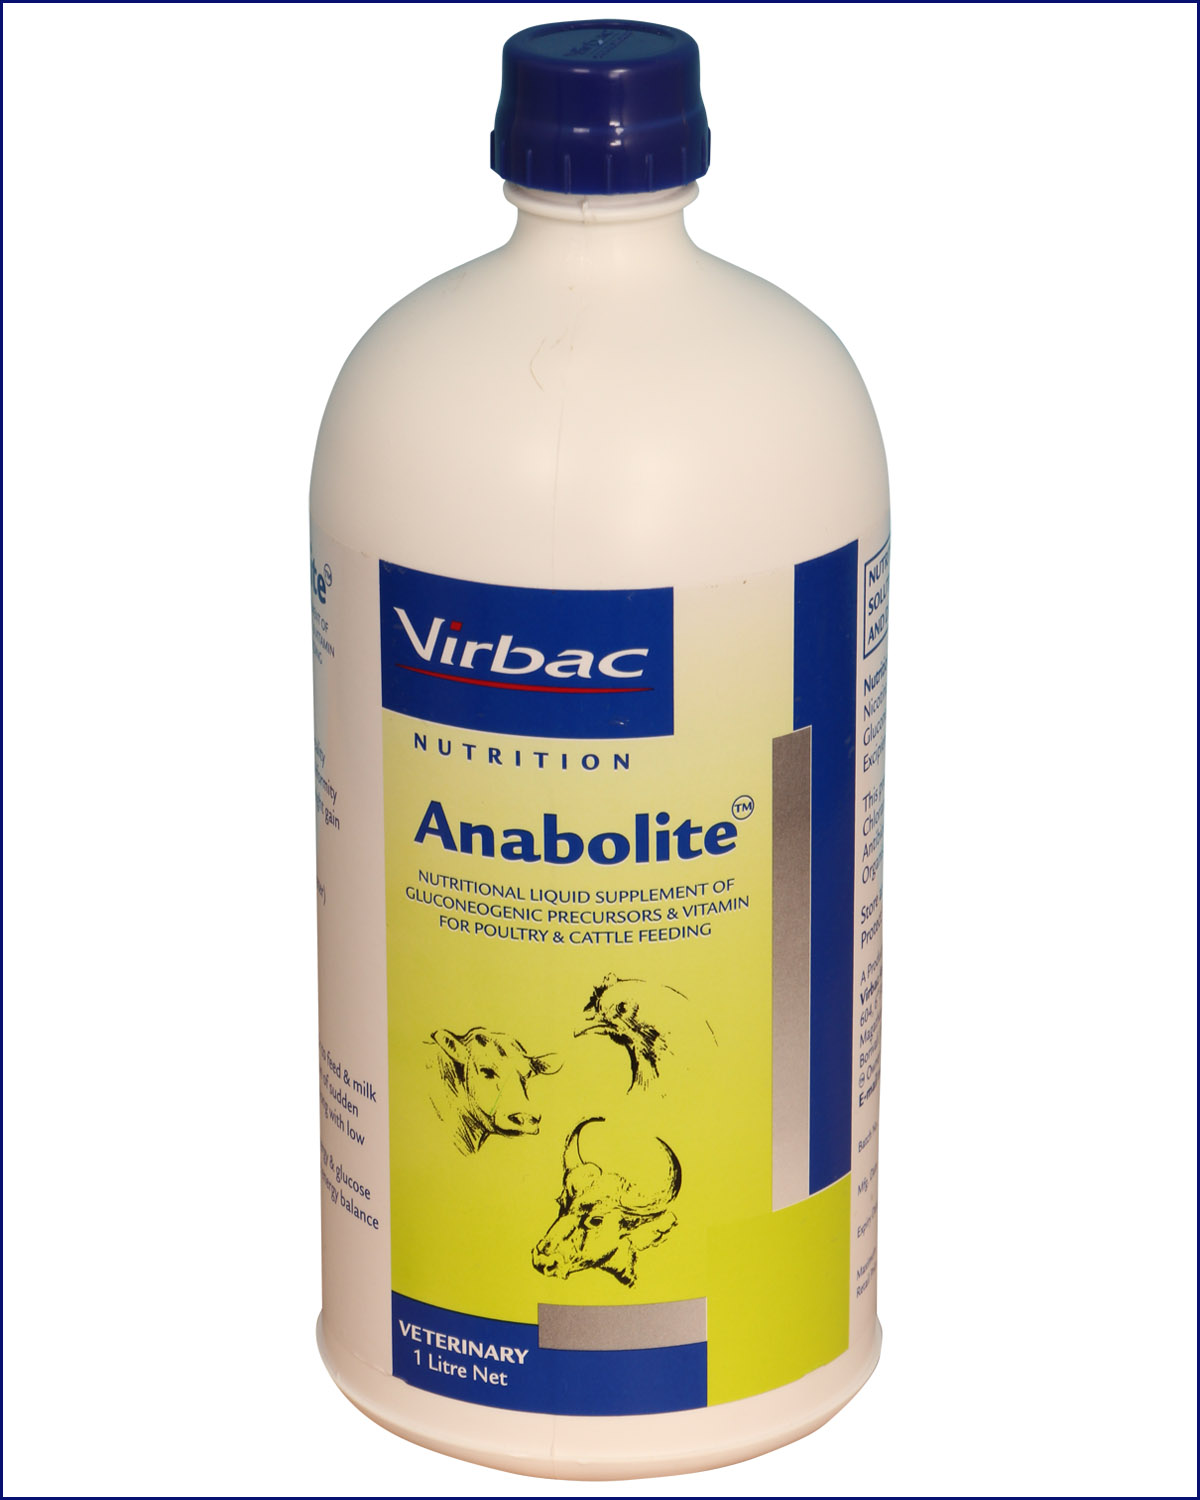 Anabolite